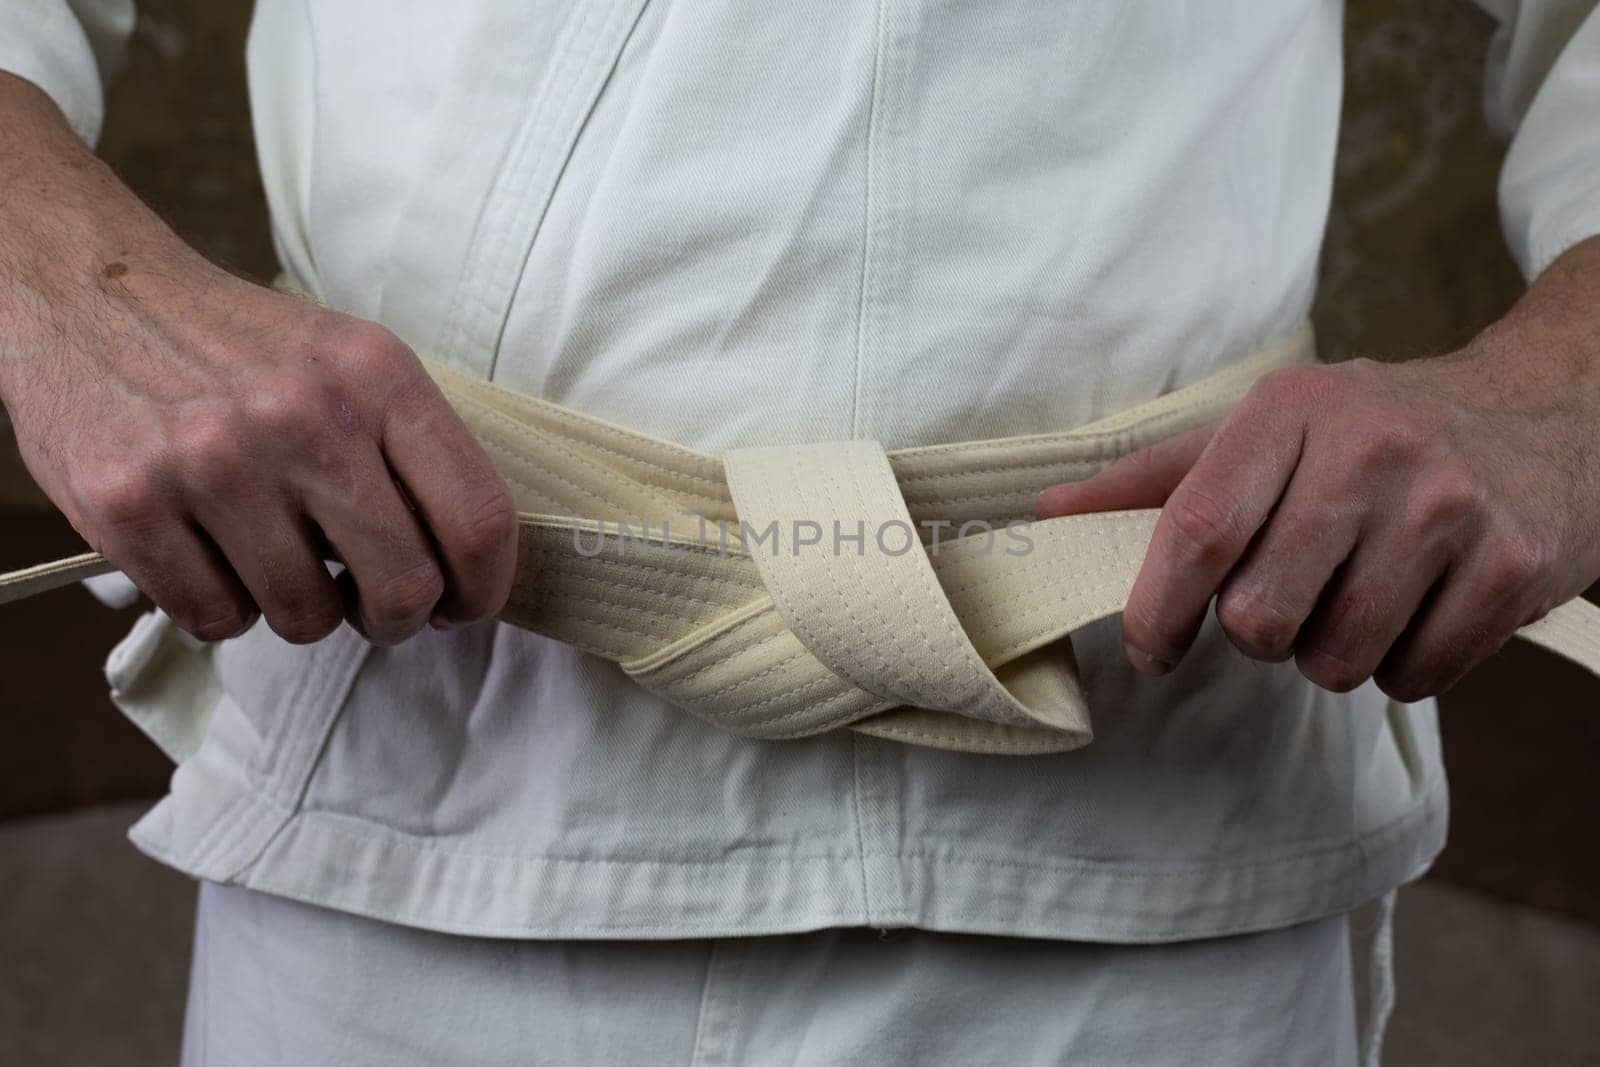 Kyokushin karate athlete tightens a white belt on kimono before a competition, preparing karate equipment